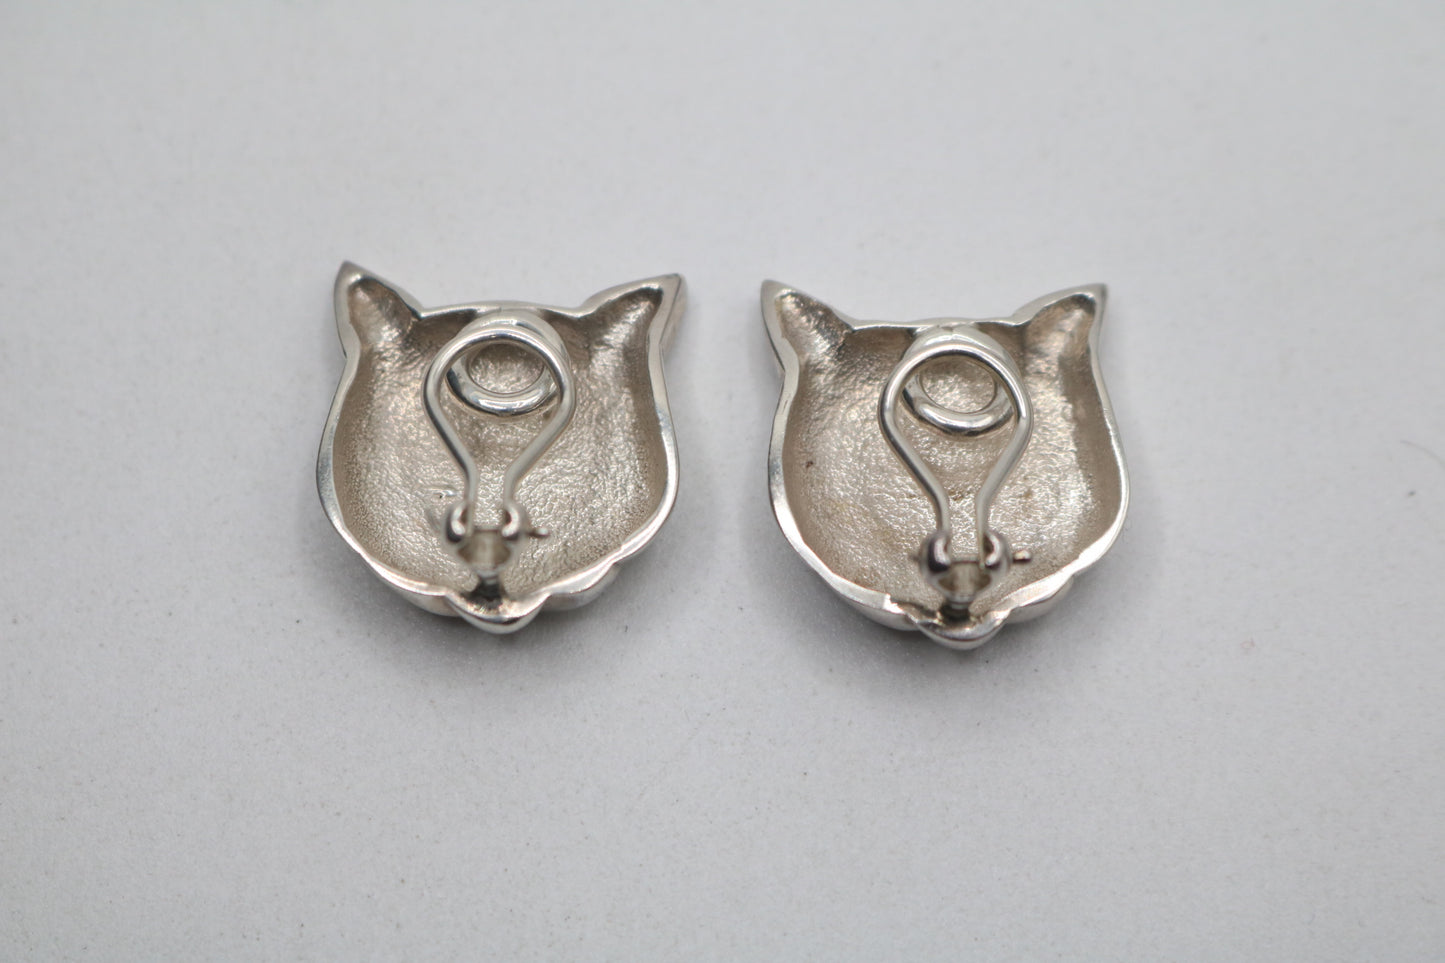 Sterling Silver Cat Earrings (18.1 Grams)